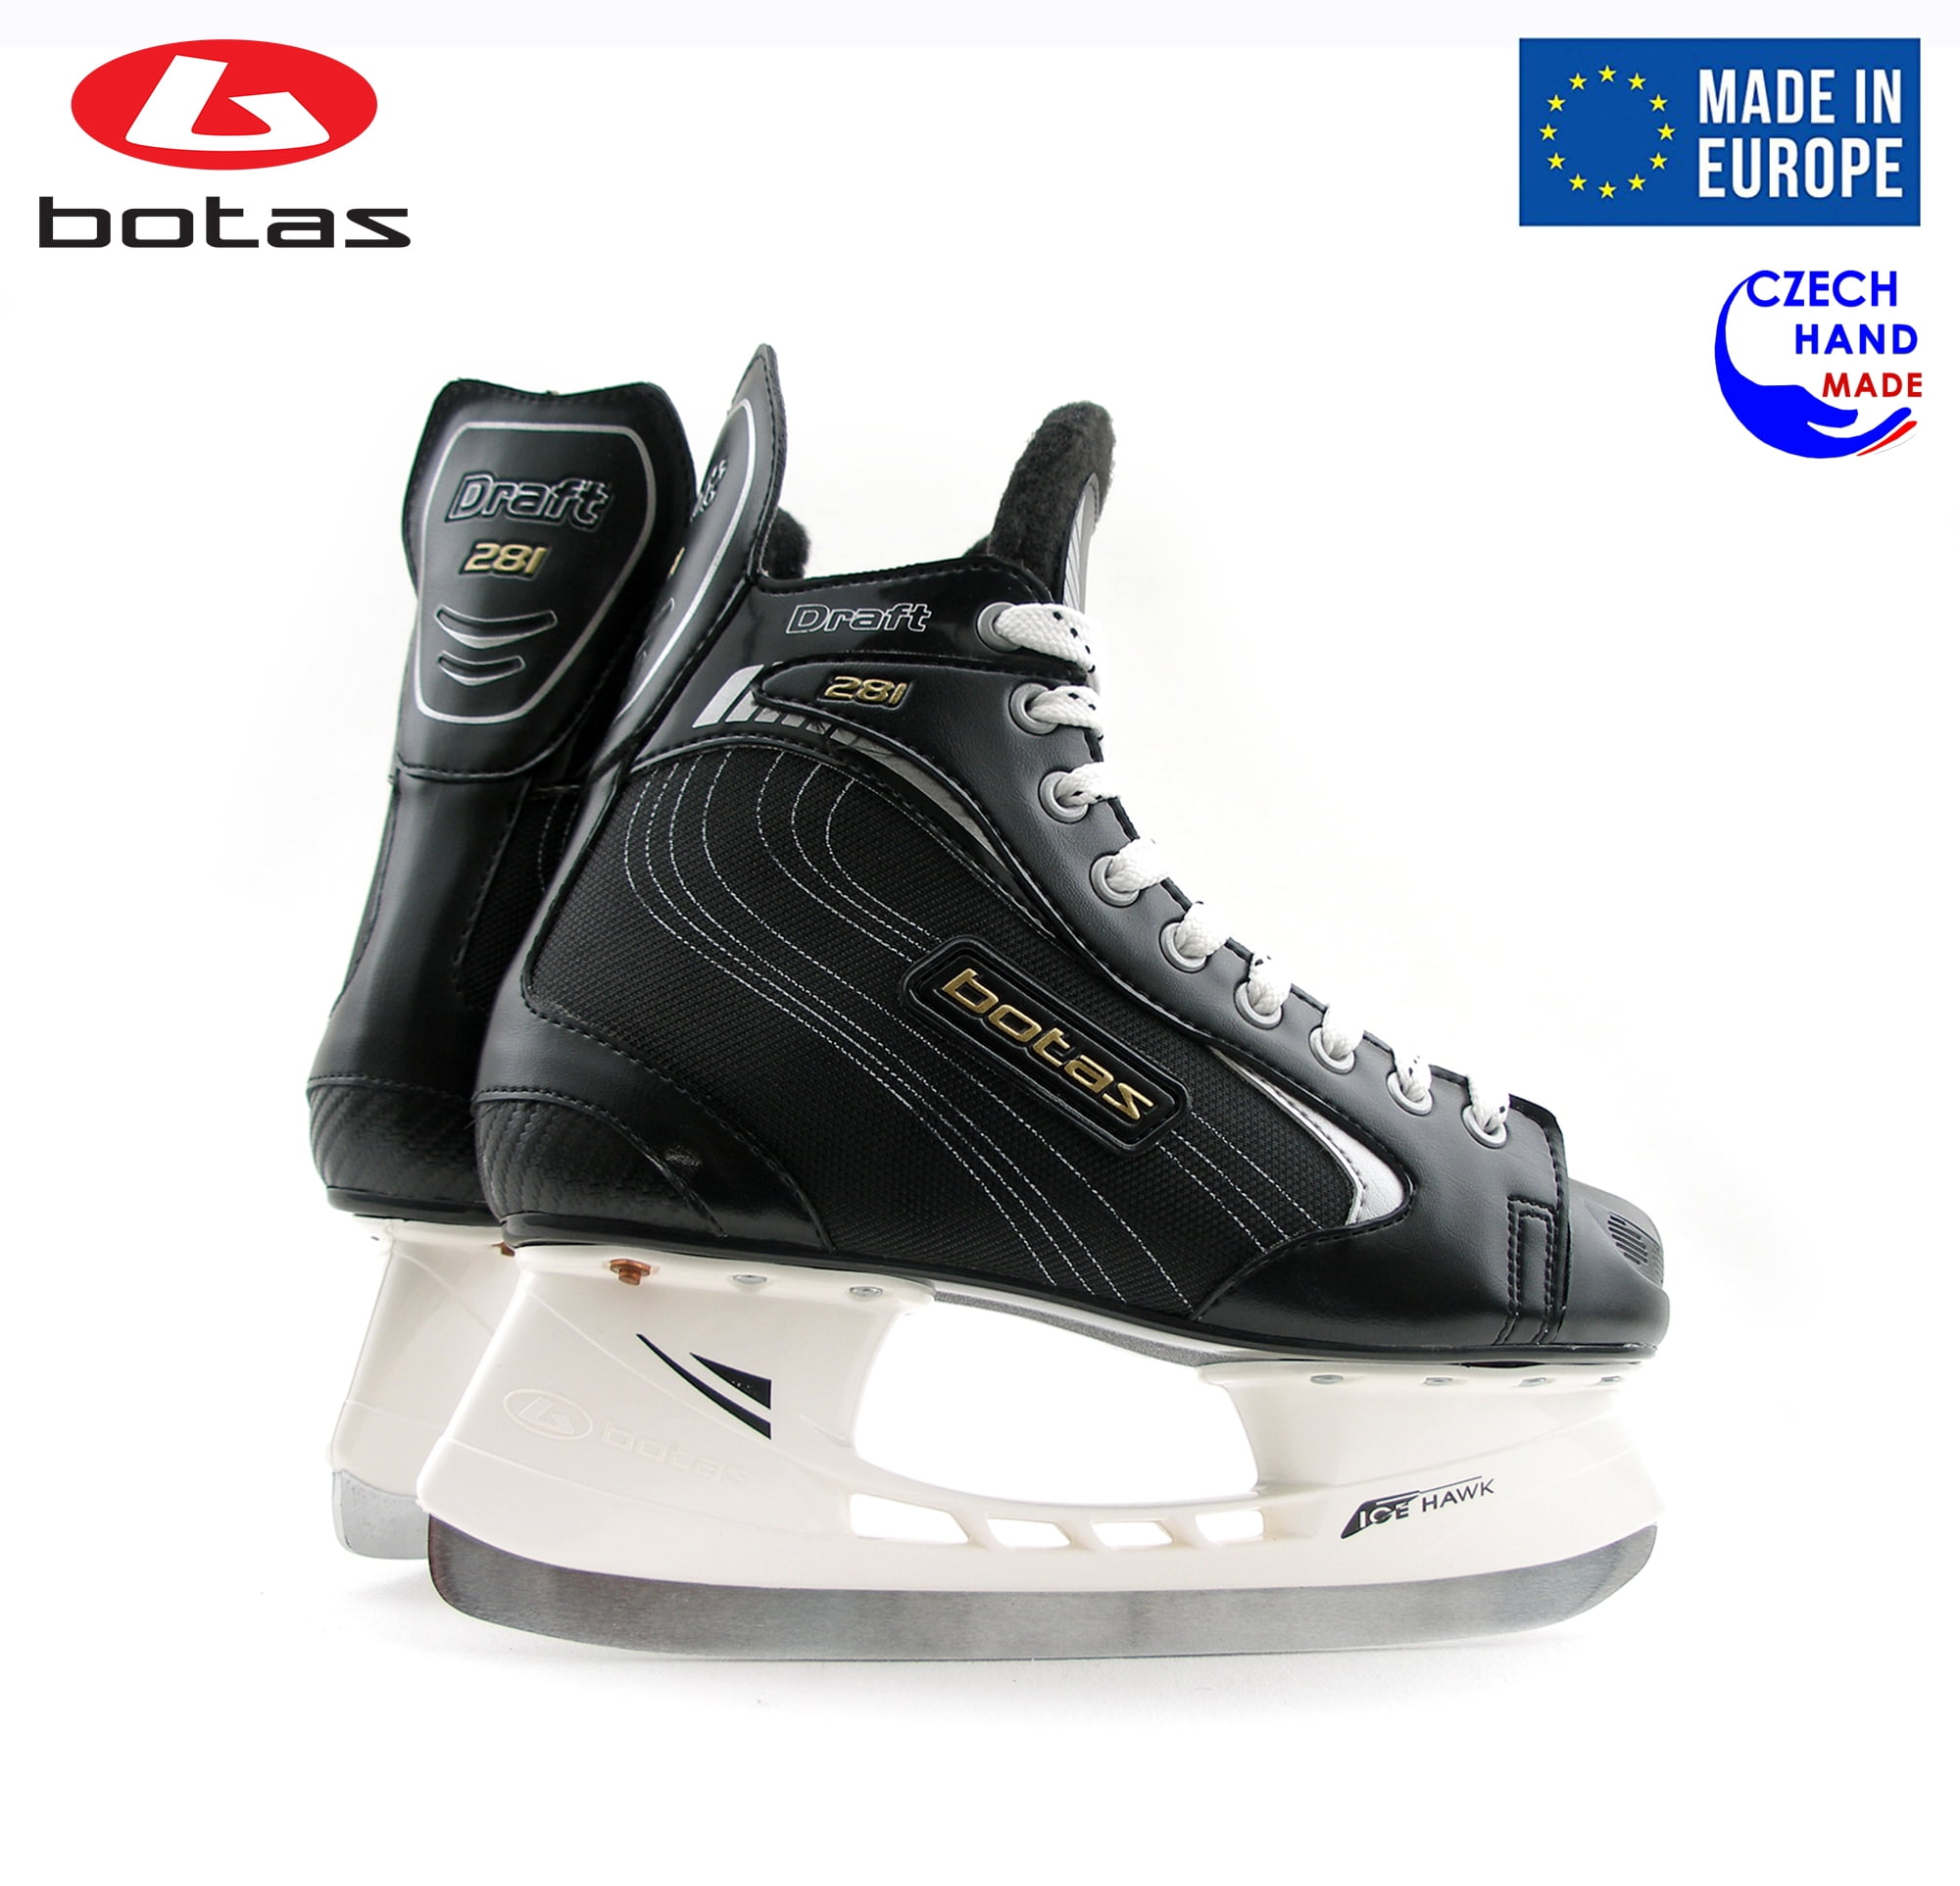 Botas Czech Republic | Color: Black Mens Ice Hockey Skates Draft 281 Made in Europe 